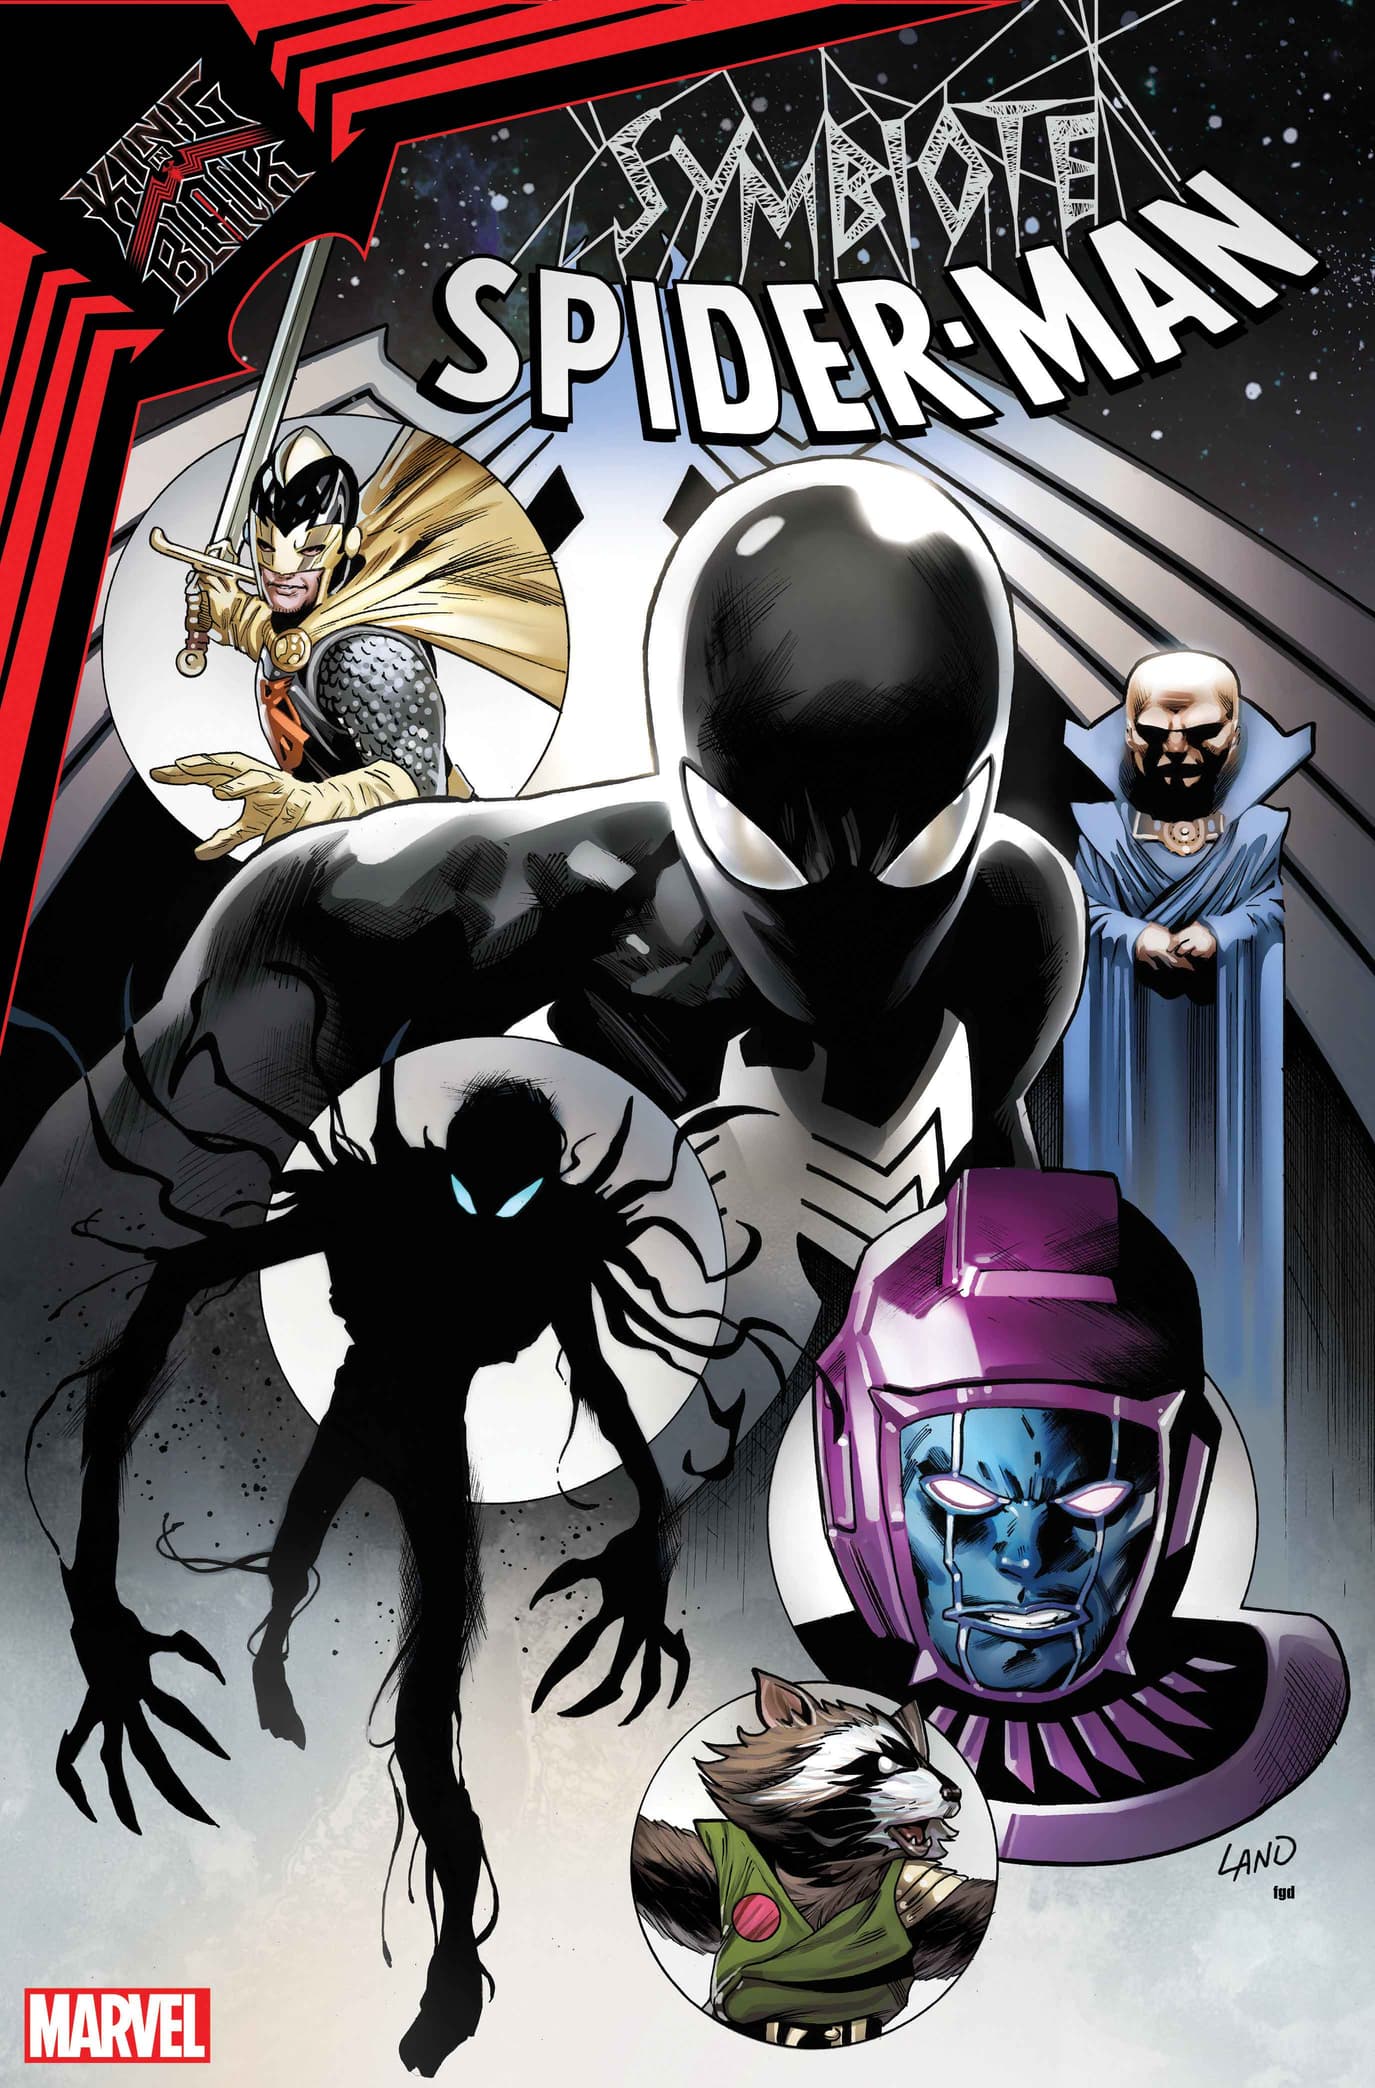 SYMBIOTE SPIDER-MAN: KING IN BLACK #1